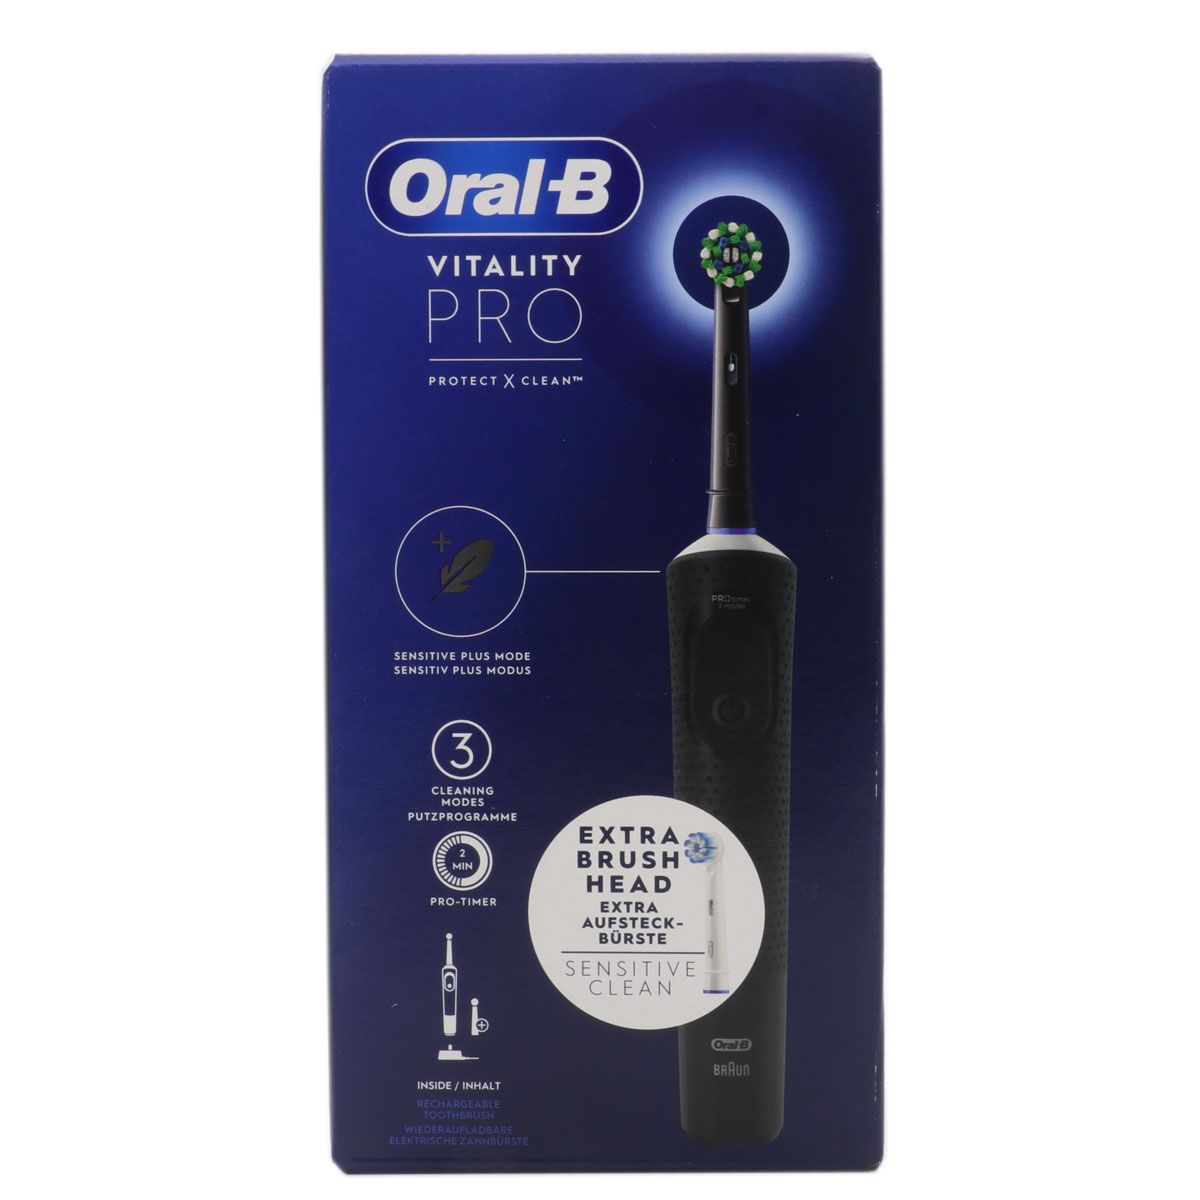 cepillo dental eléctrico negro Vitality Pro